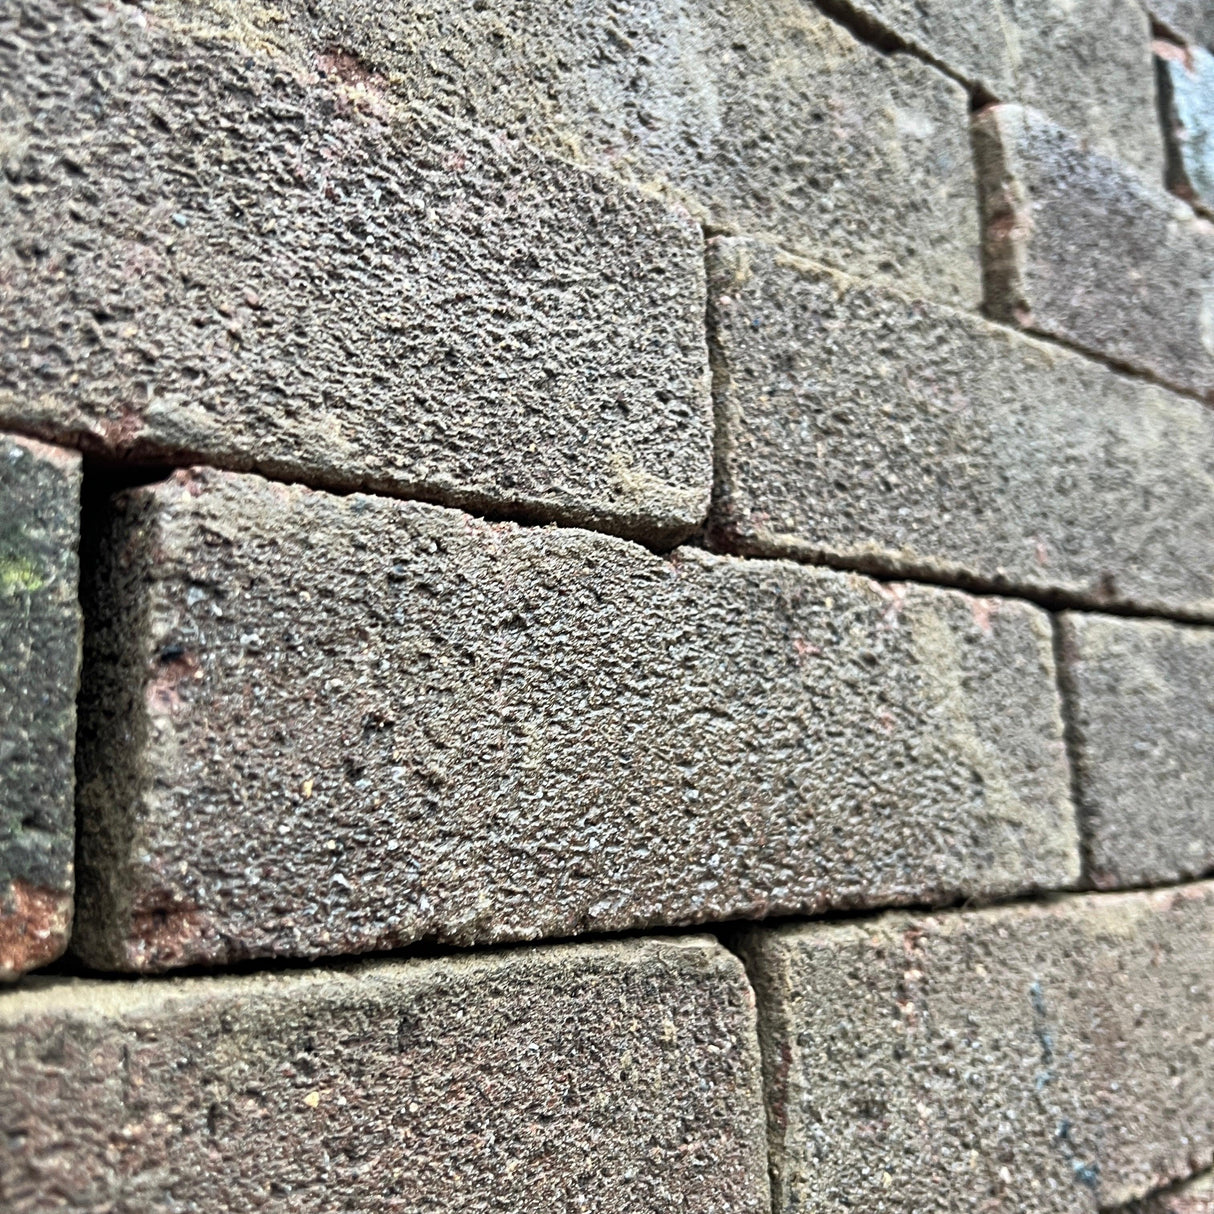 Reclaimed Rustic Bricks - Reclaimed Brick Company